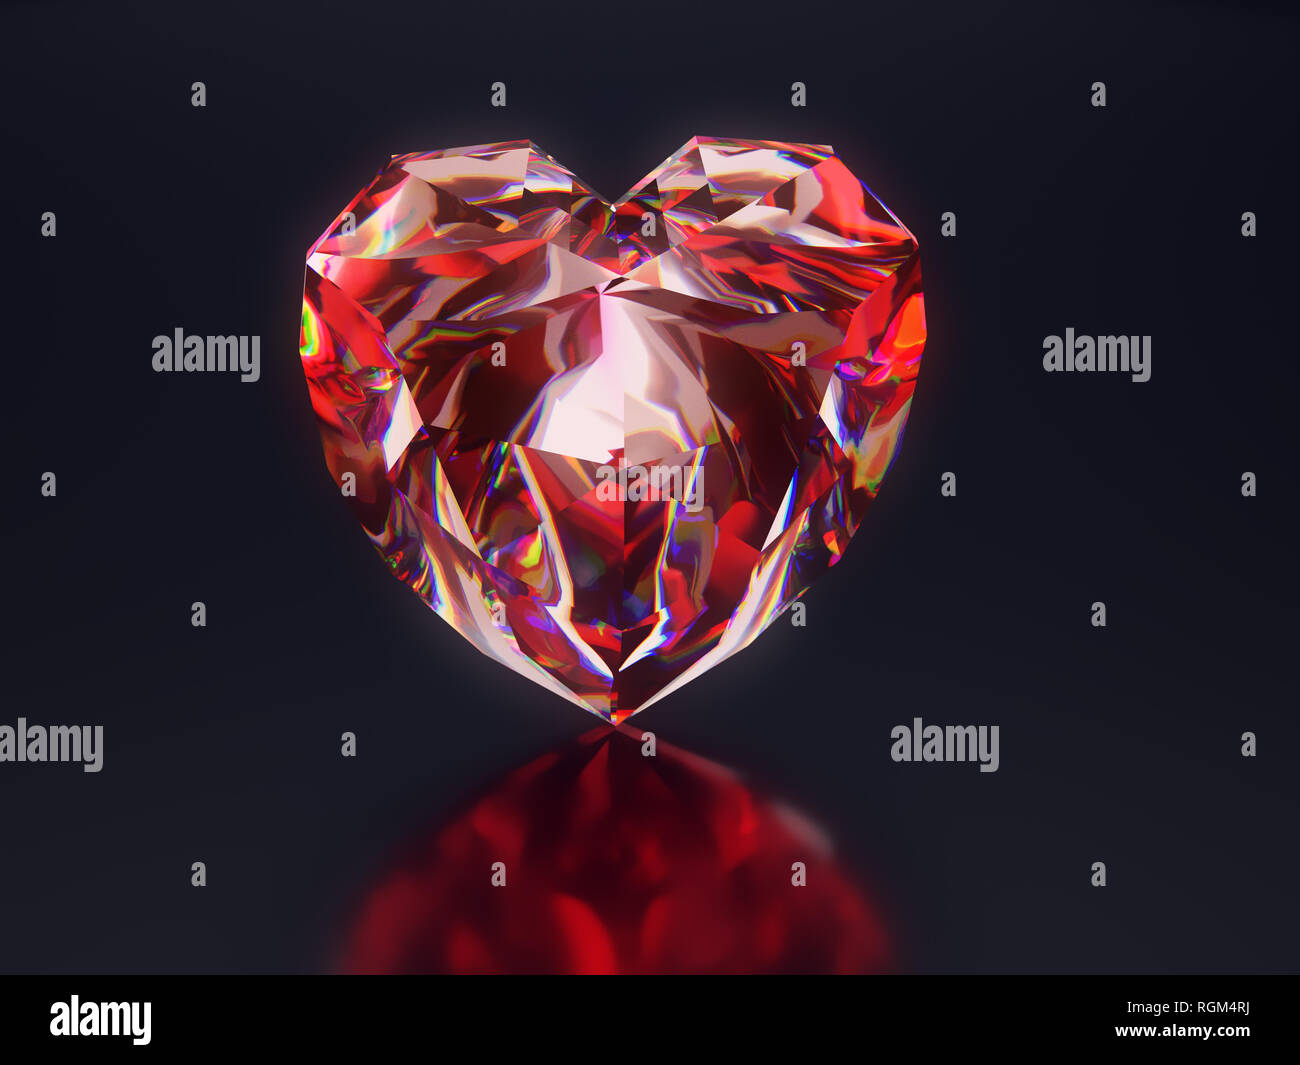 3d Render Of Shiny Red Diamond Heart On Black Background Stock Photo